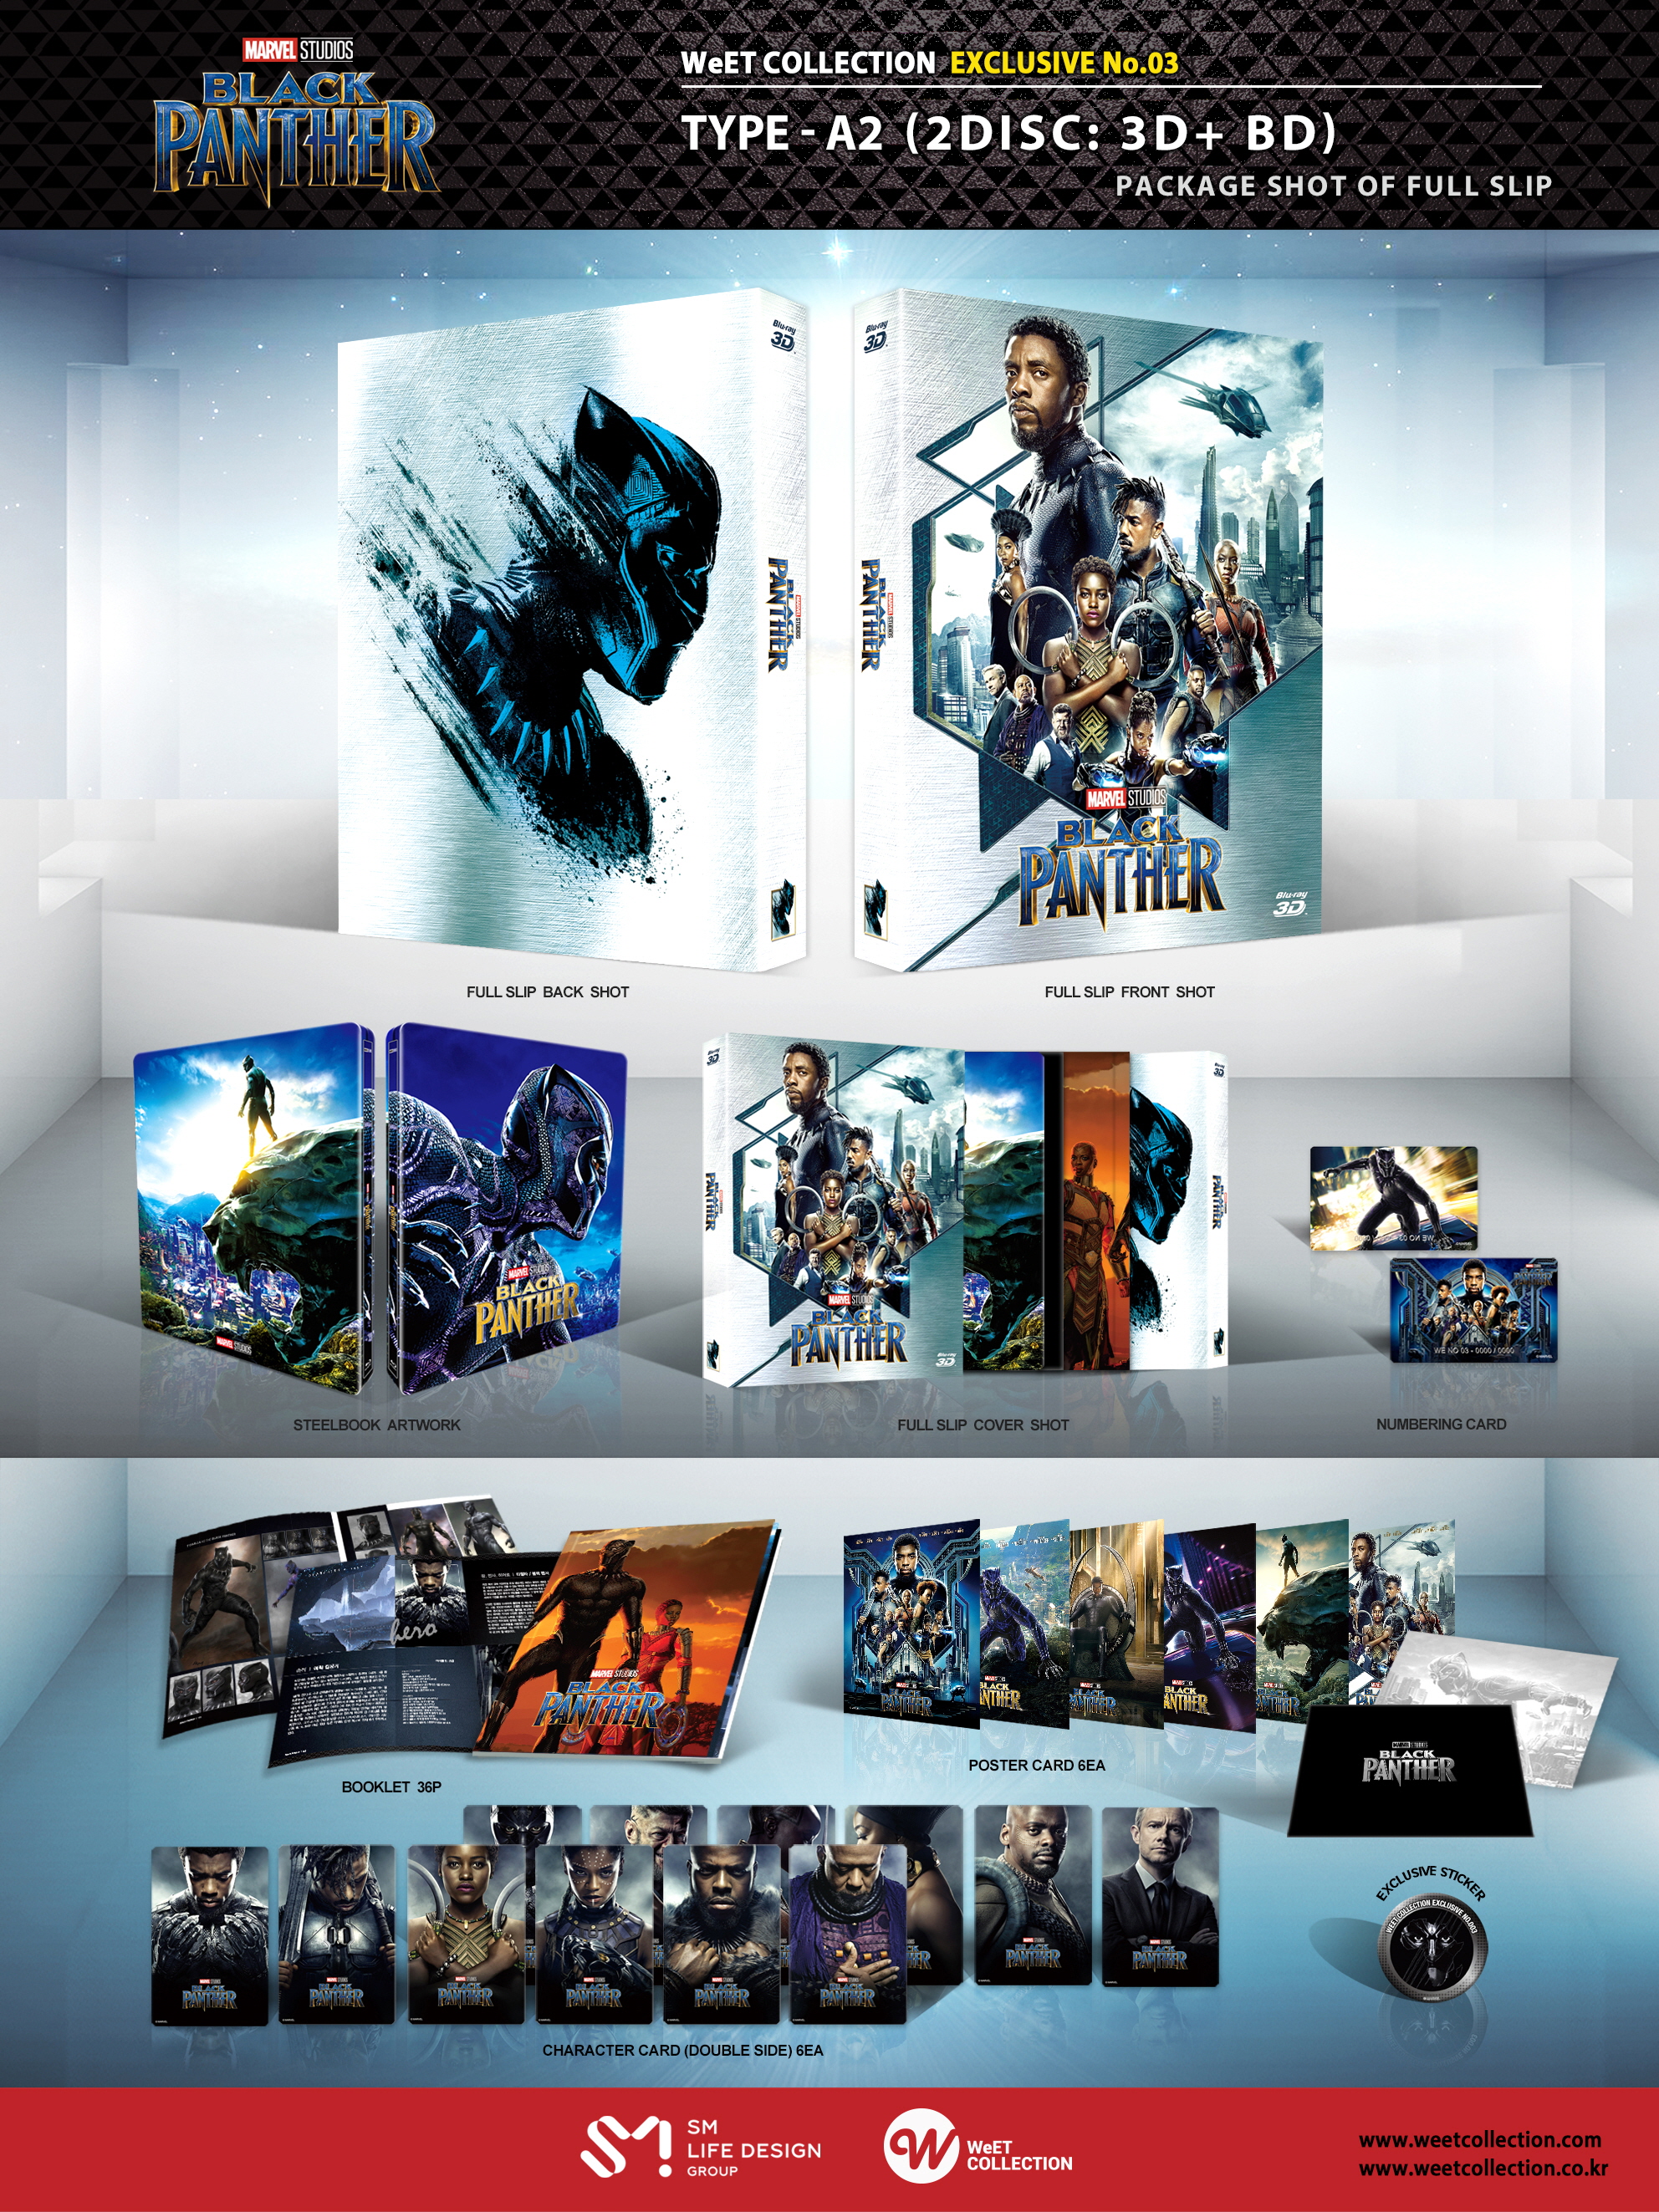 Blu-ray] Black Panther Fullslip A2(2Disc: 3D+2D) Steelbook LE